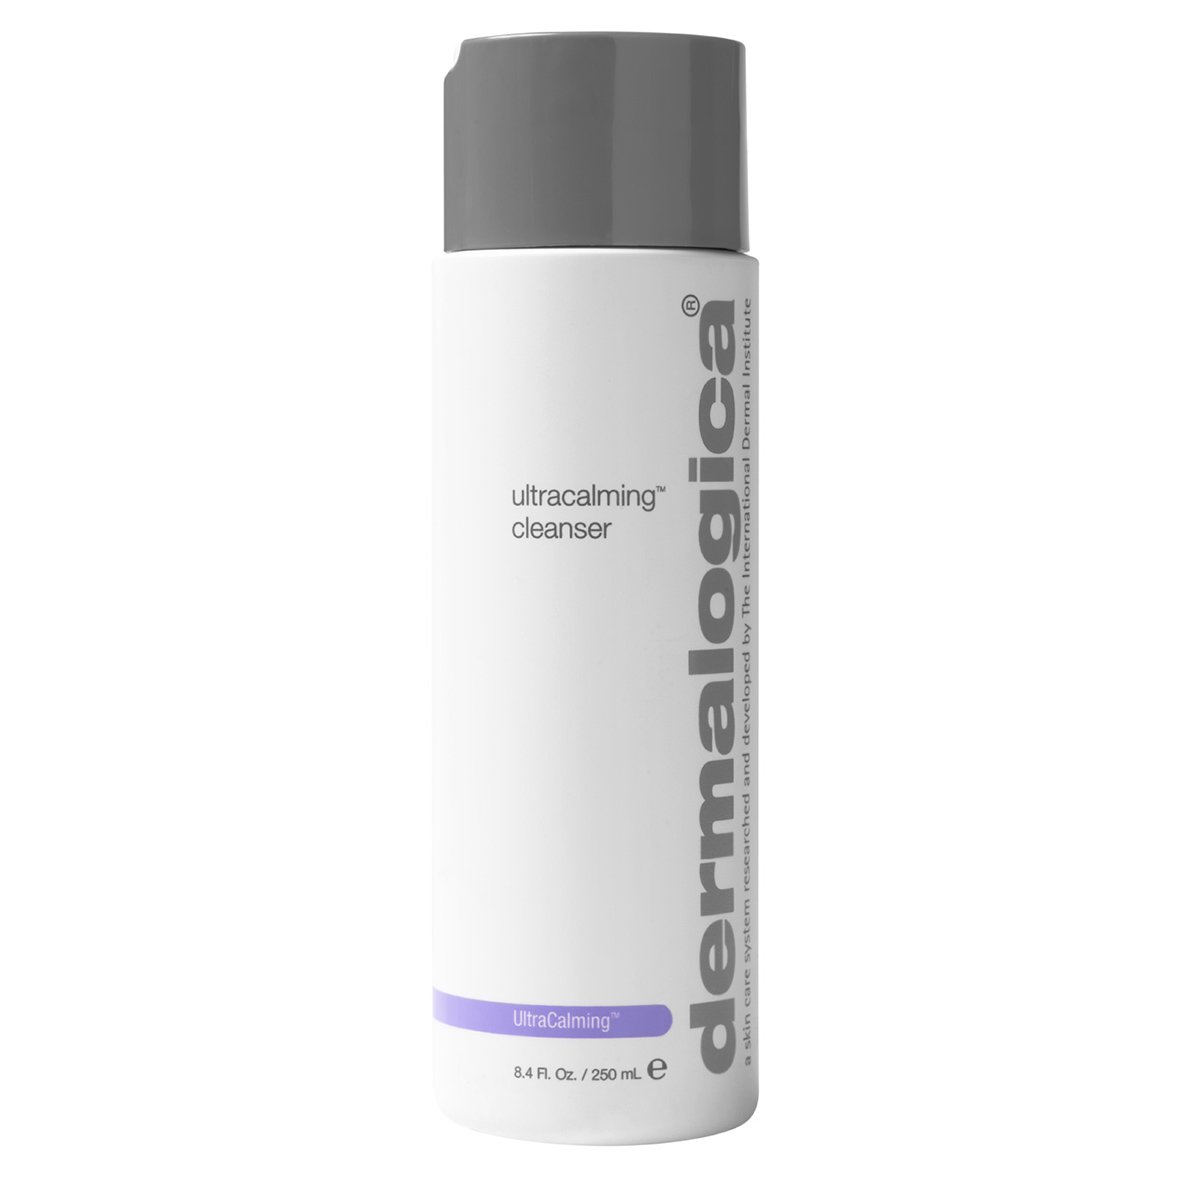 dermalogica - UltraCalming Cleanser 250 ml